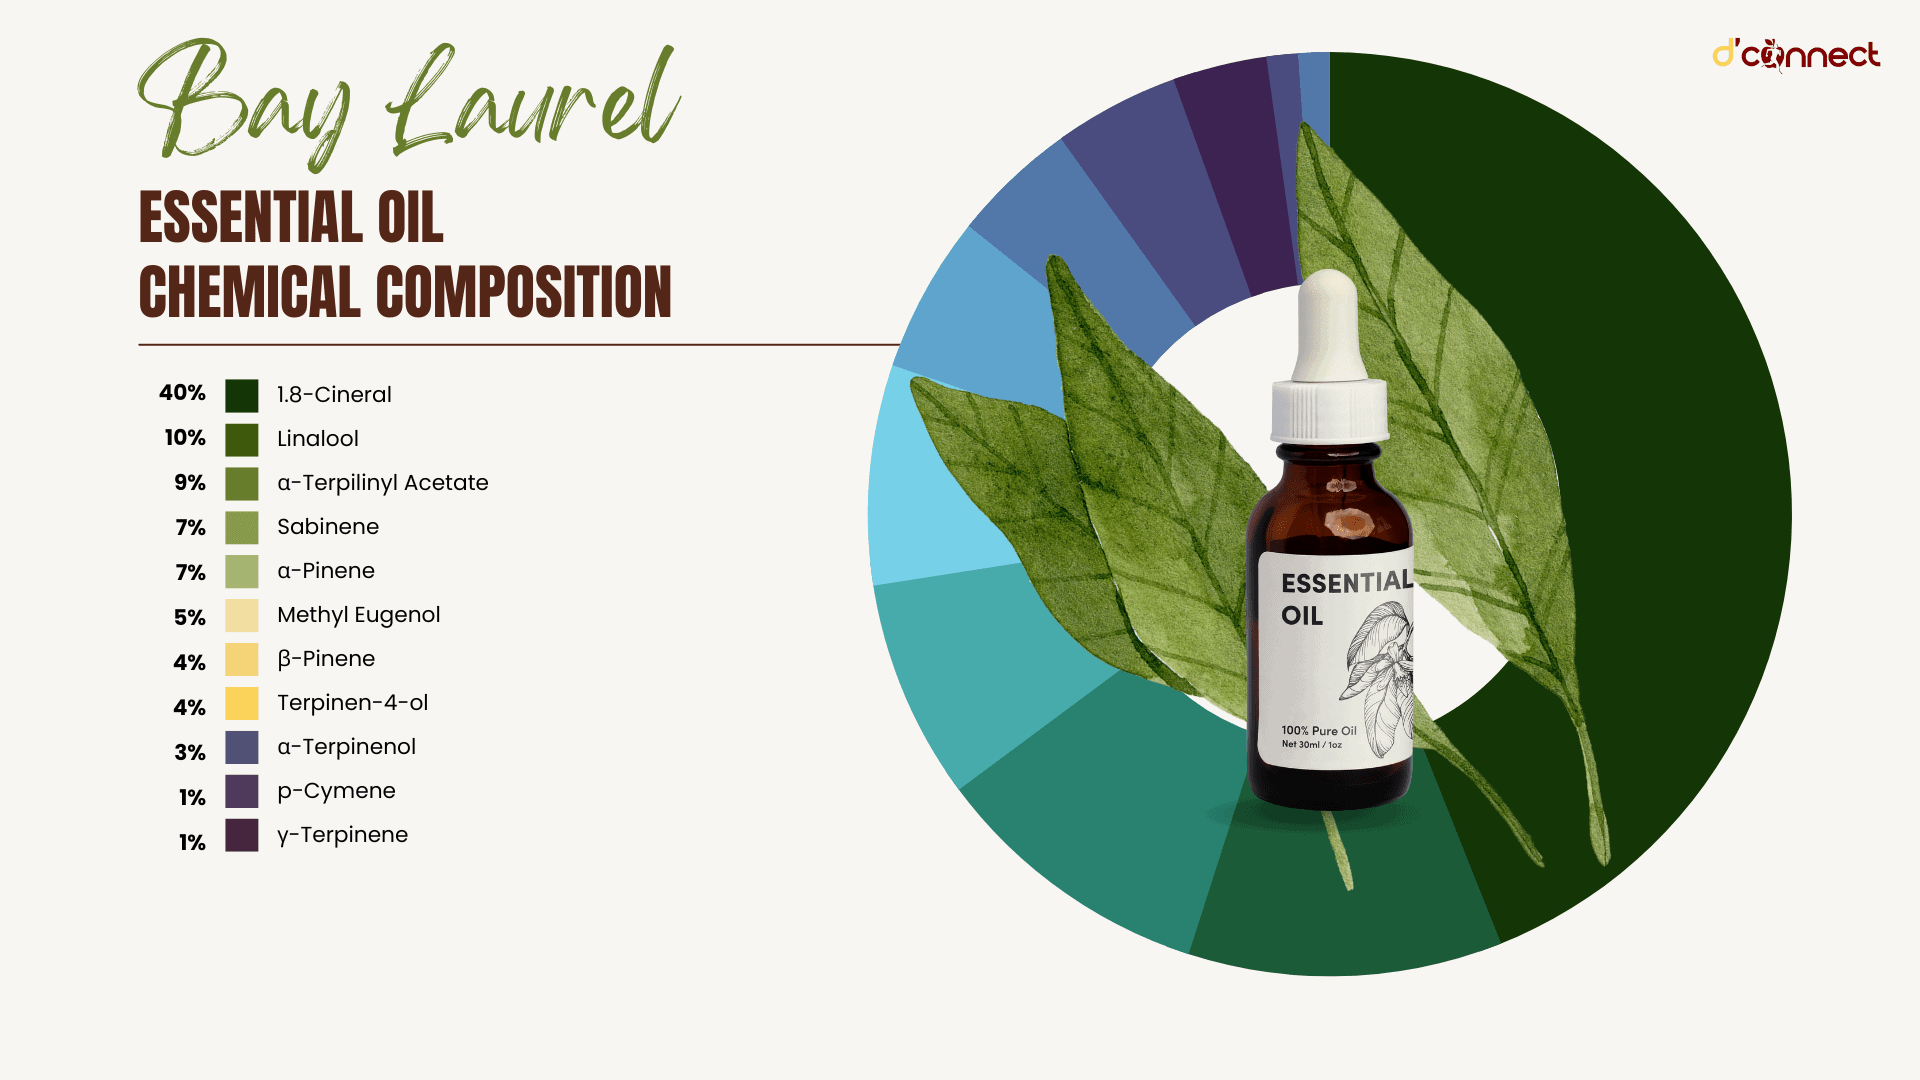 Bay Laurel essential oil - chemical composition